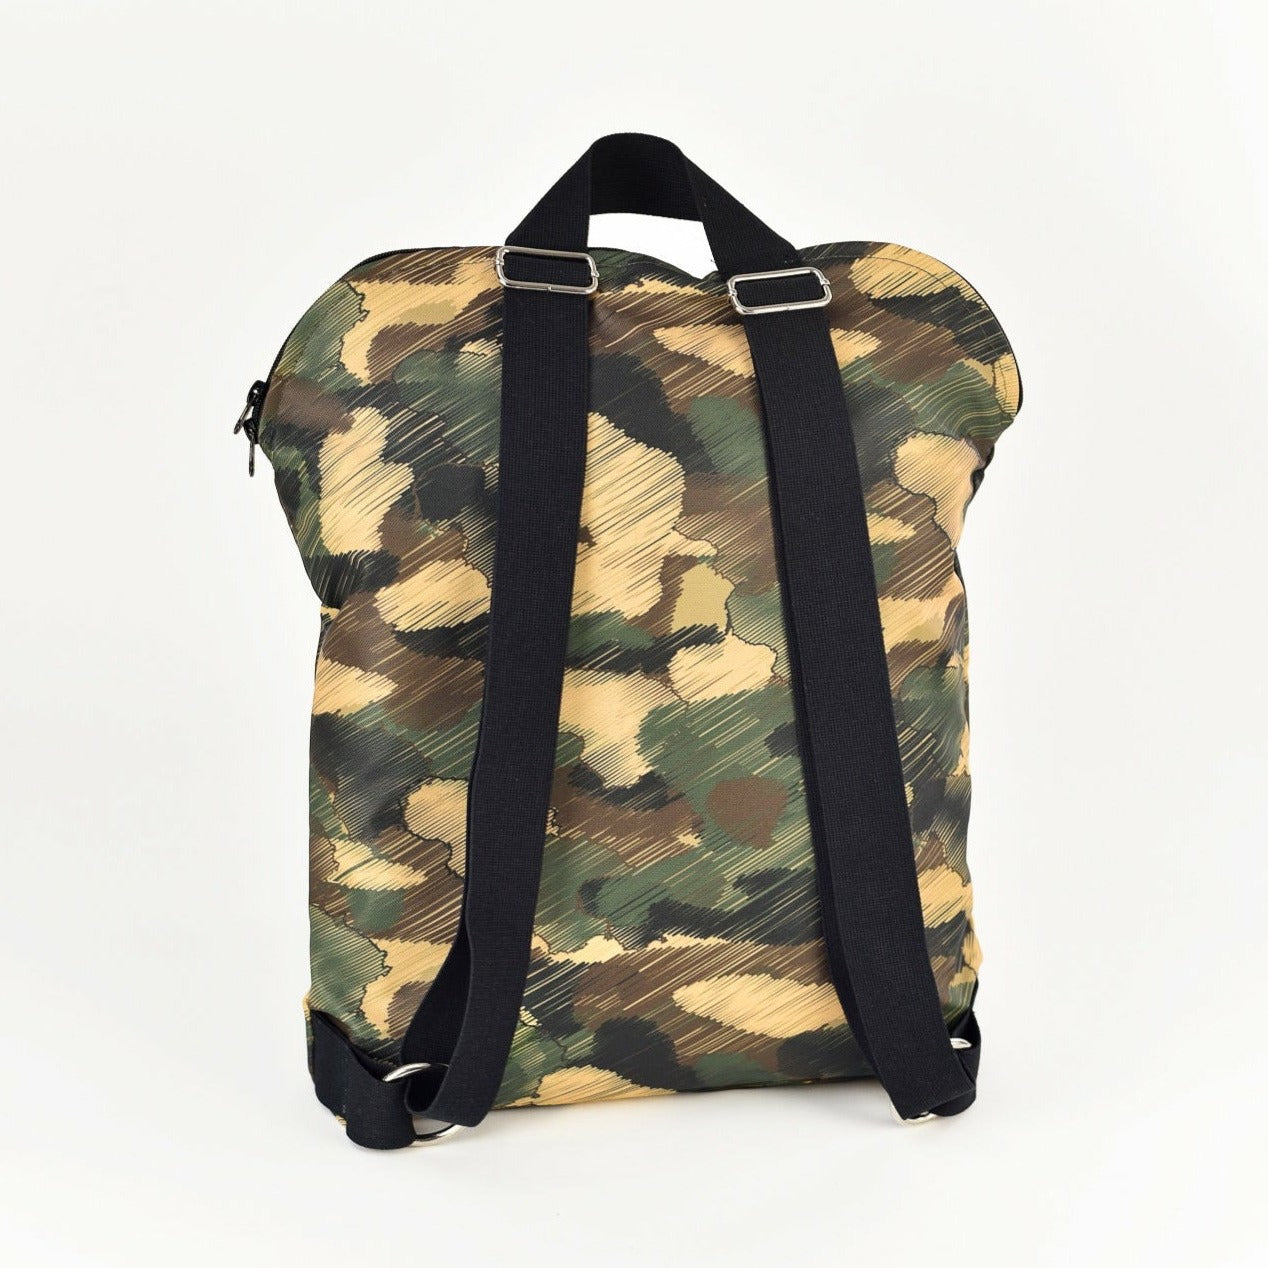 Backpack "Lithuania"